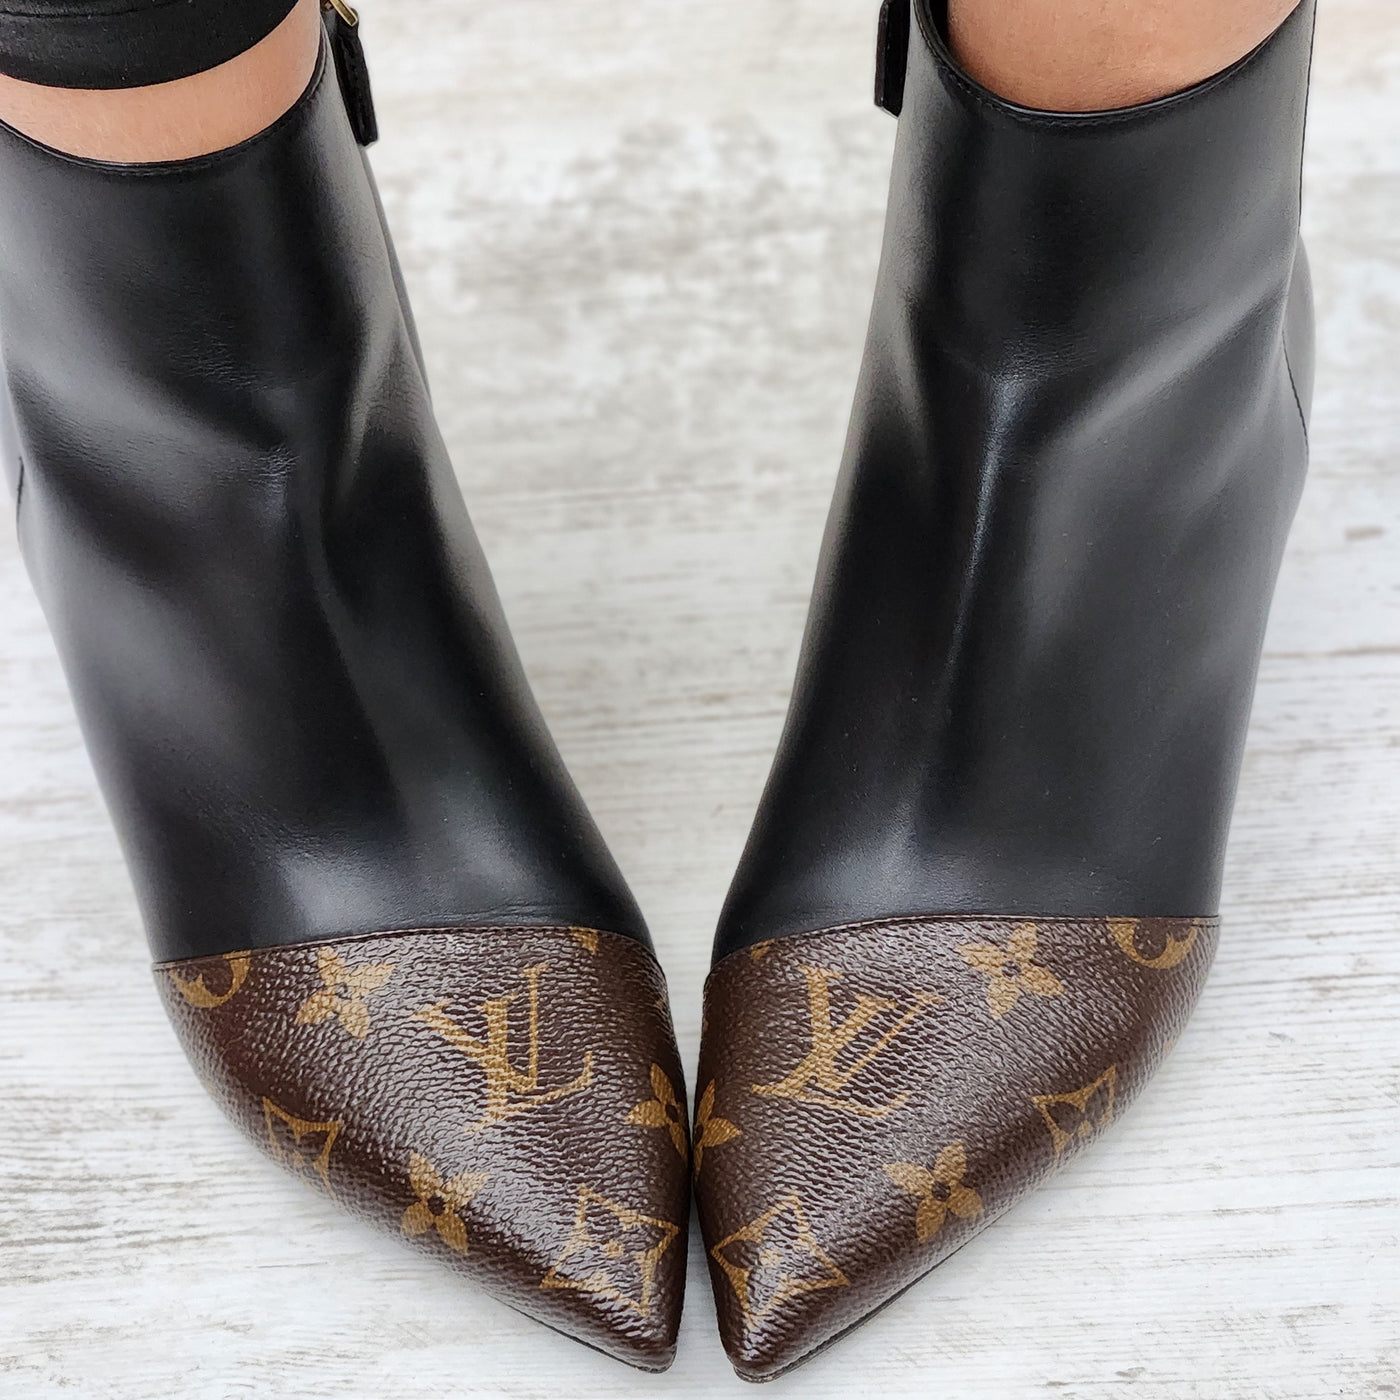 Louis Vuitton Women's Leather Shoes EU Size 36 UK 3.5 